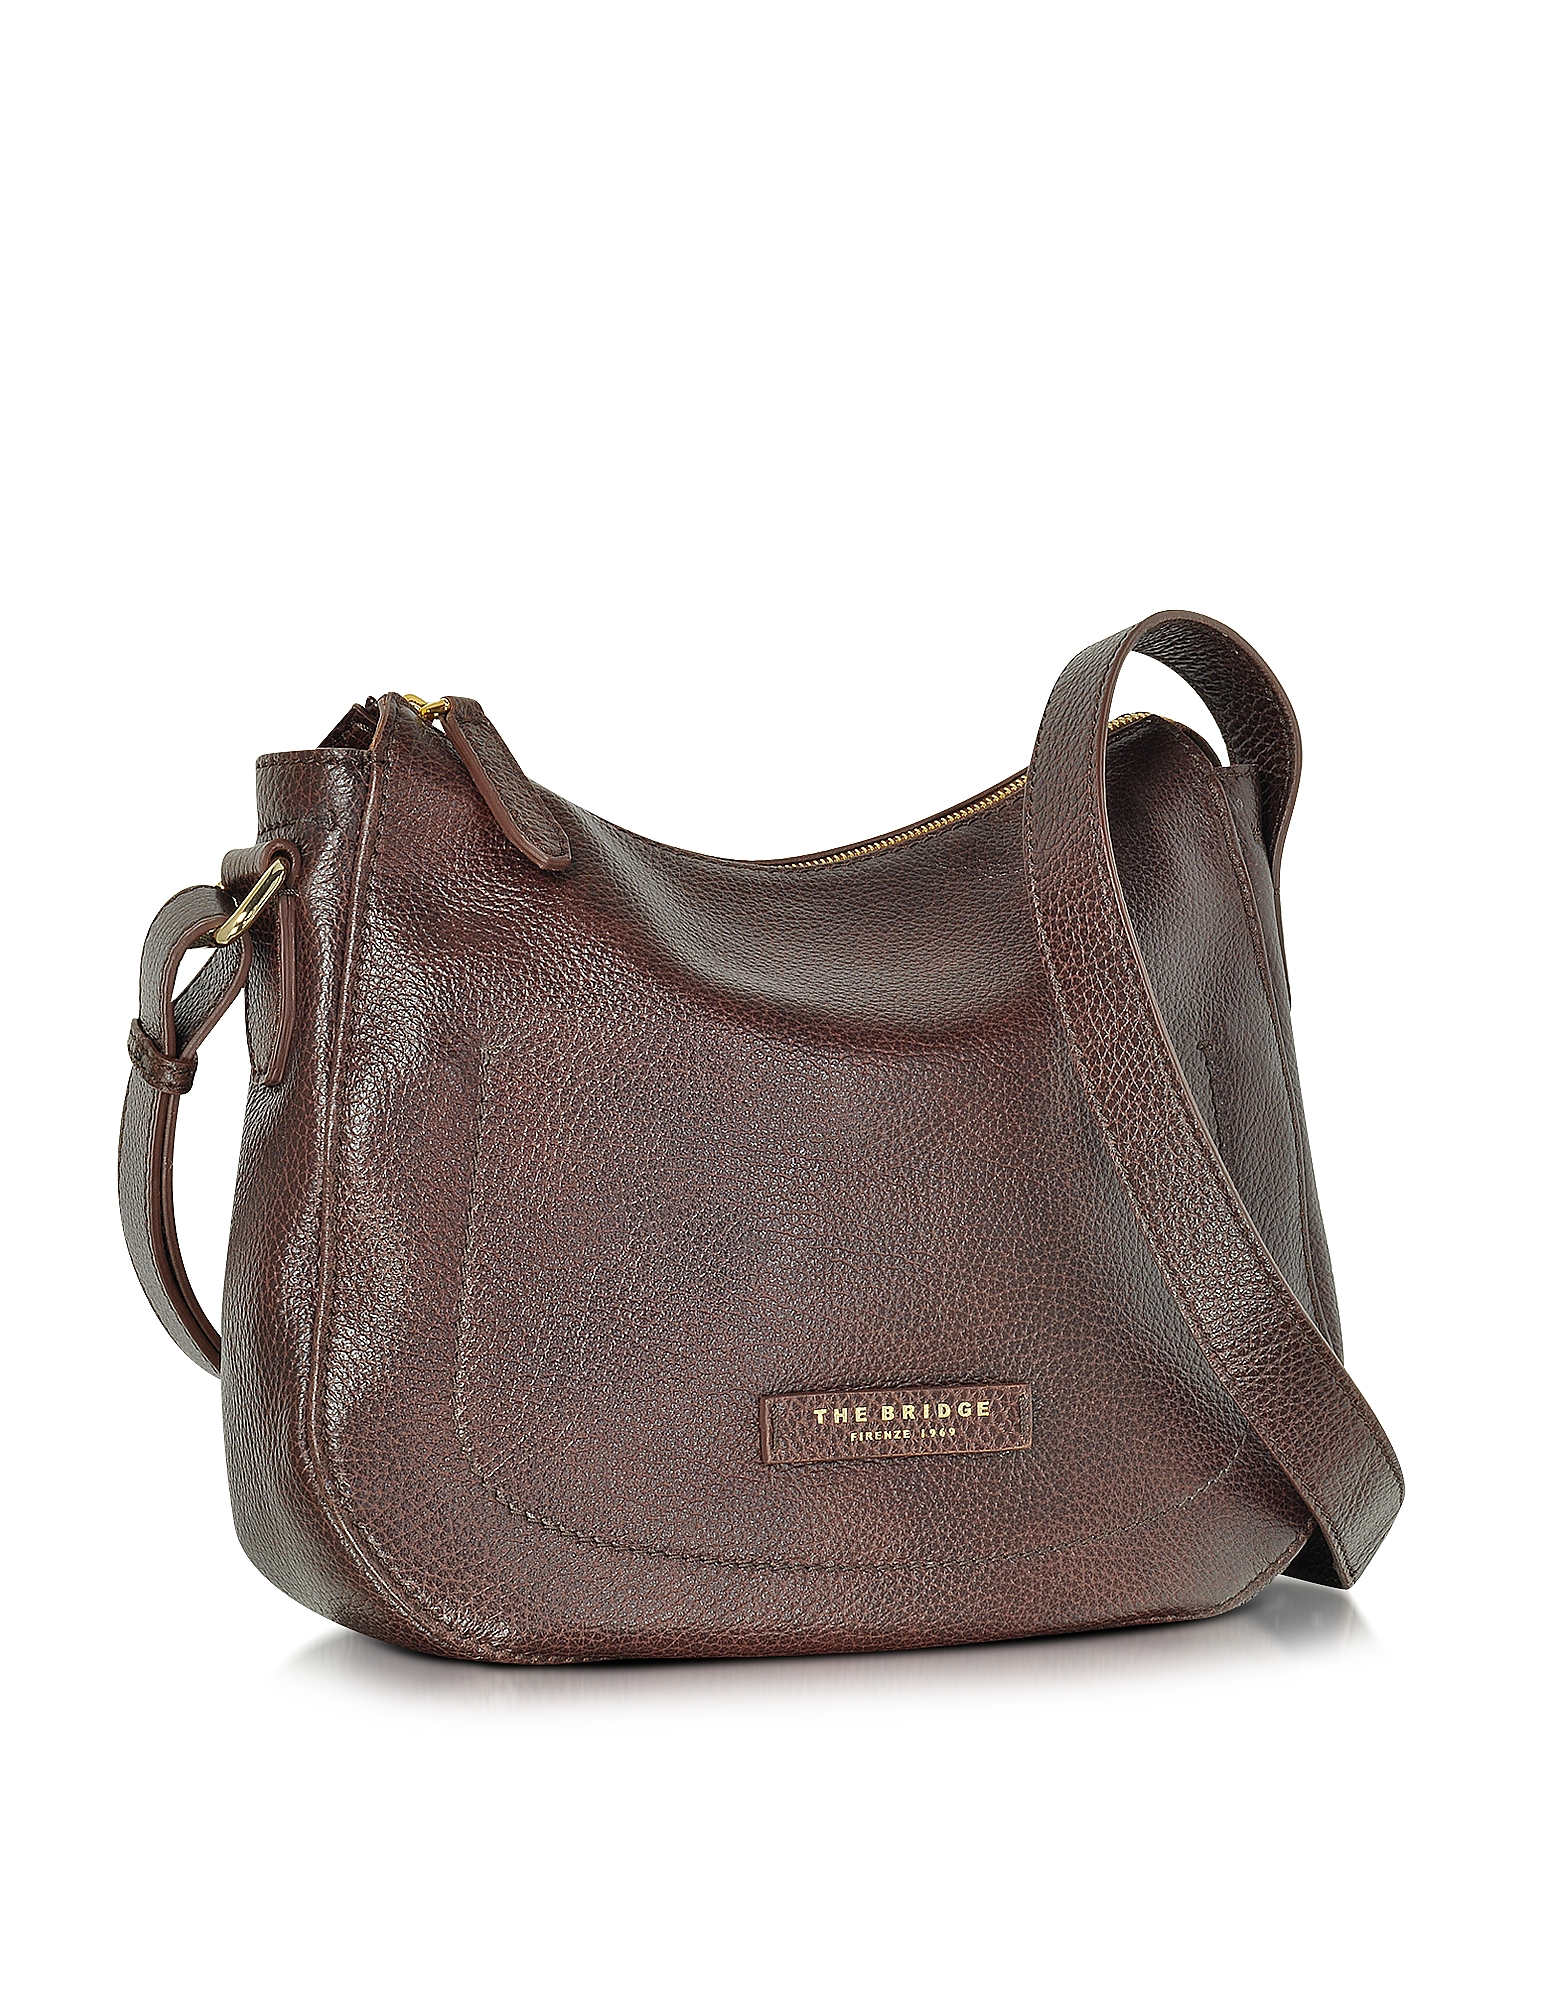 Lyst - The Bridge Plume Soft Donna Dark Brown Leather Shoulder Bag in Brown